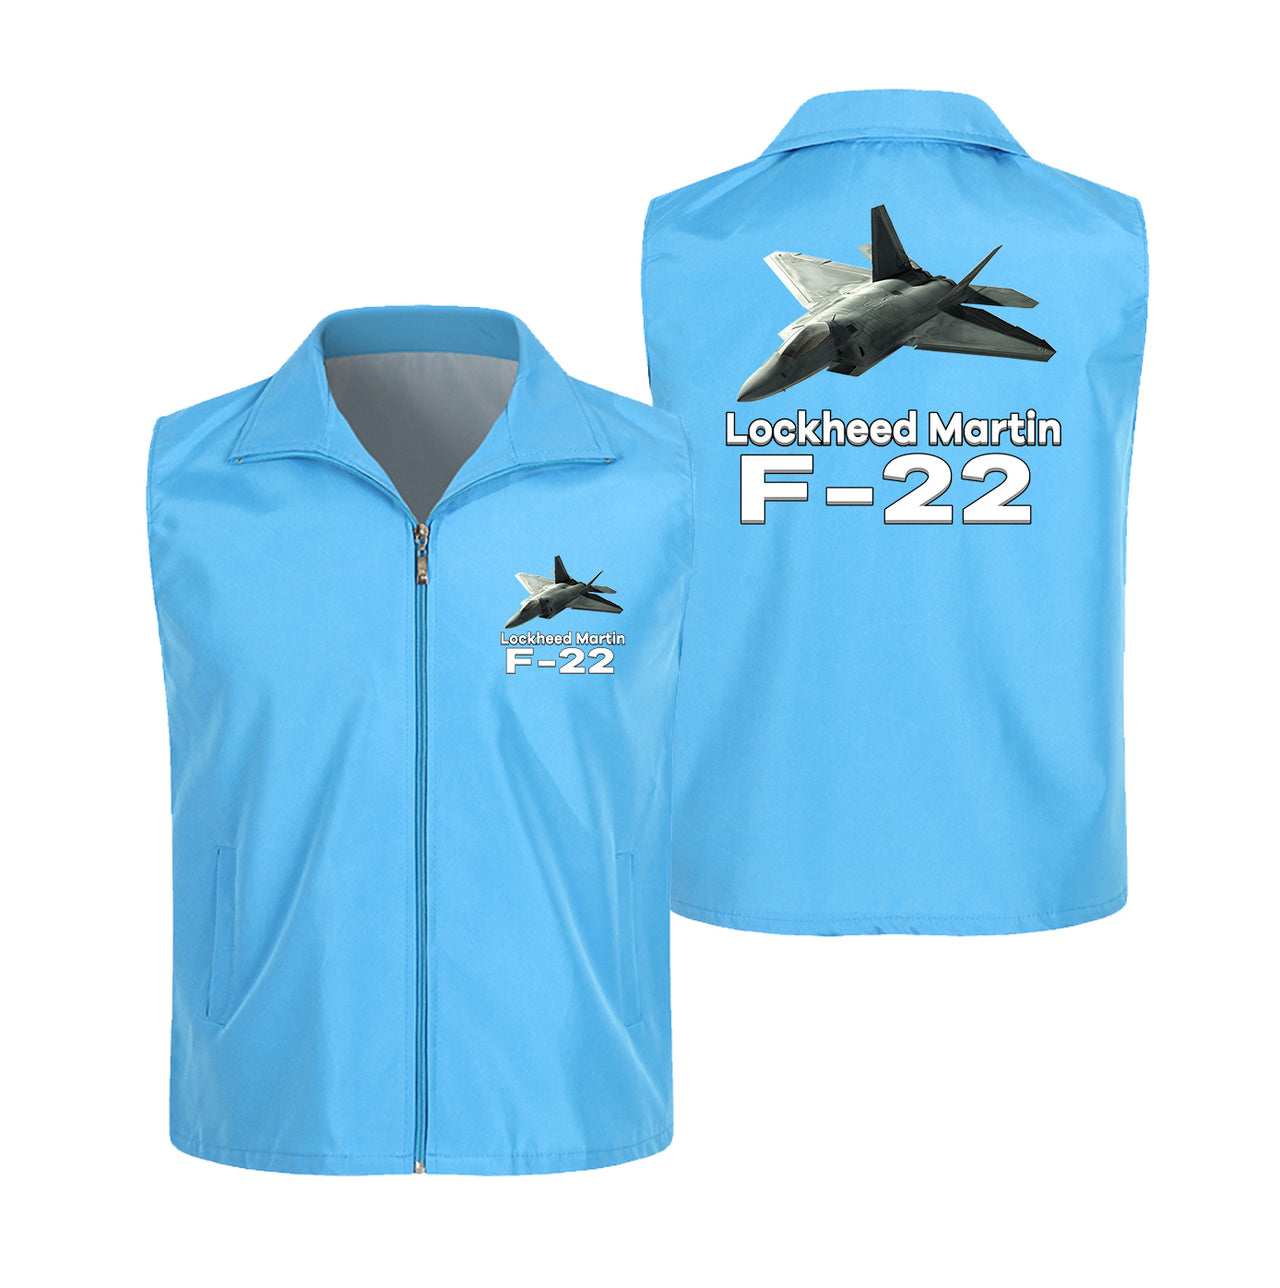 The Lockheed Martin F22 Designed Thin Style Vests